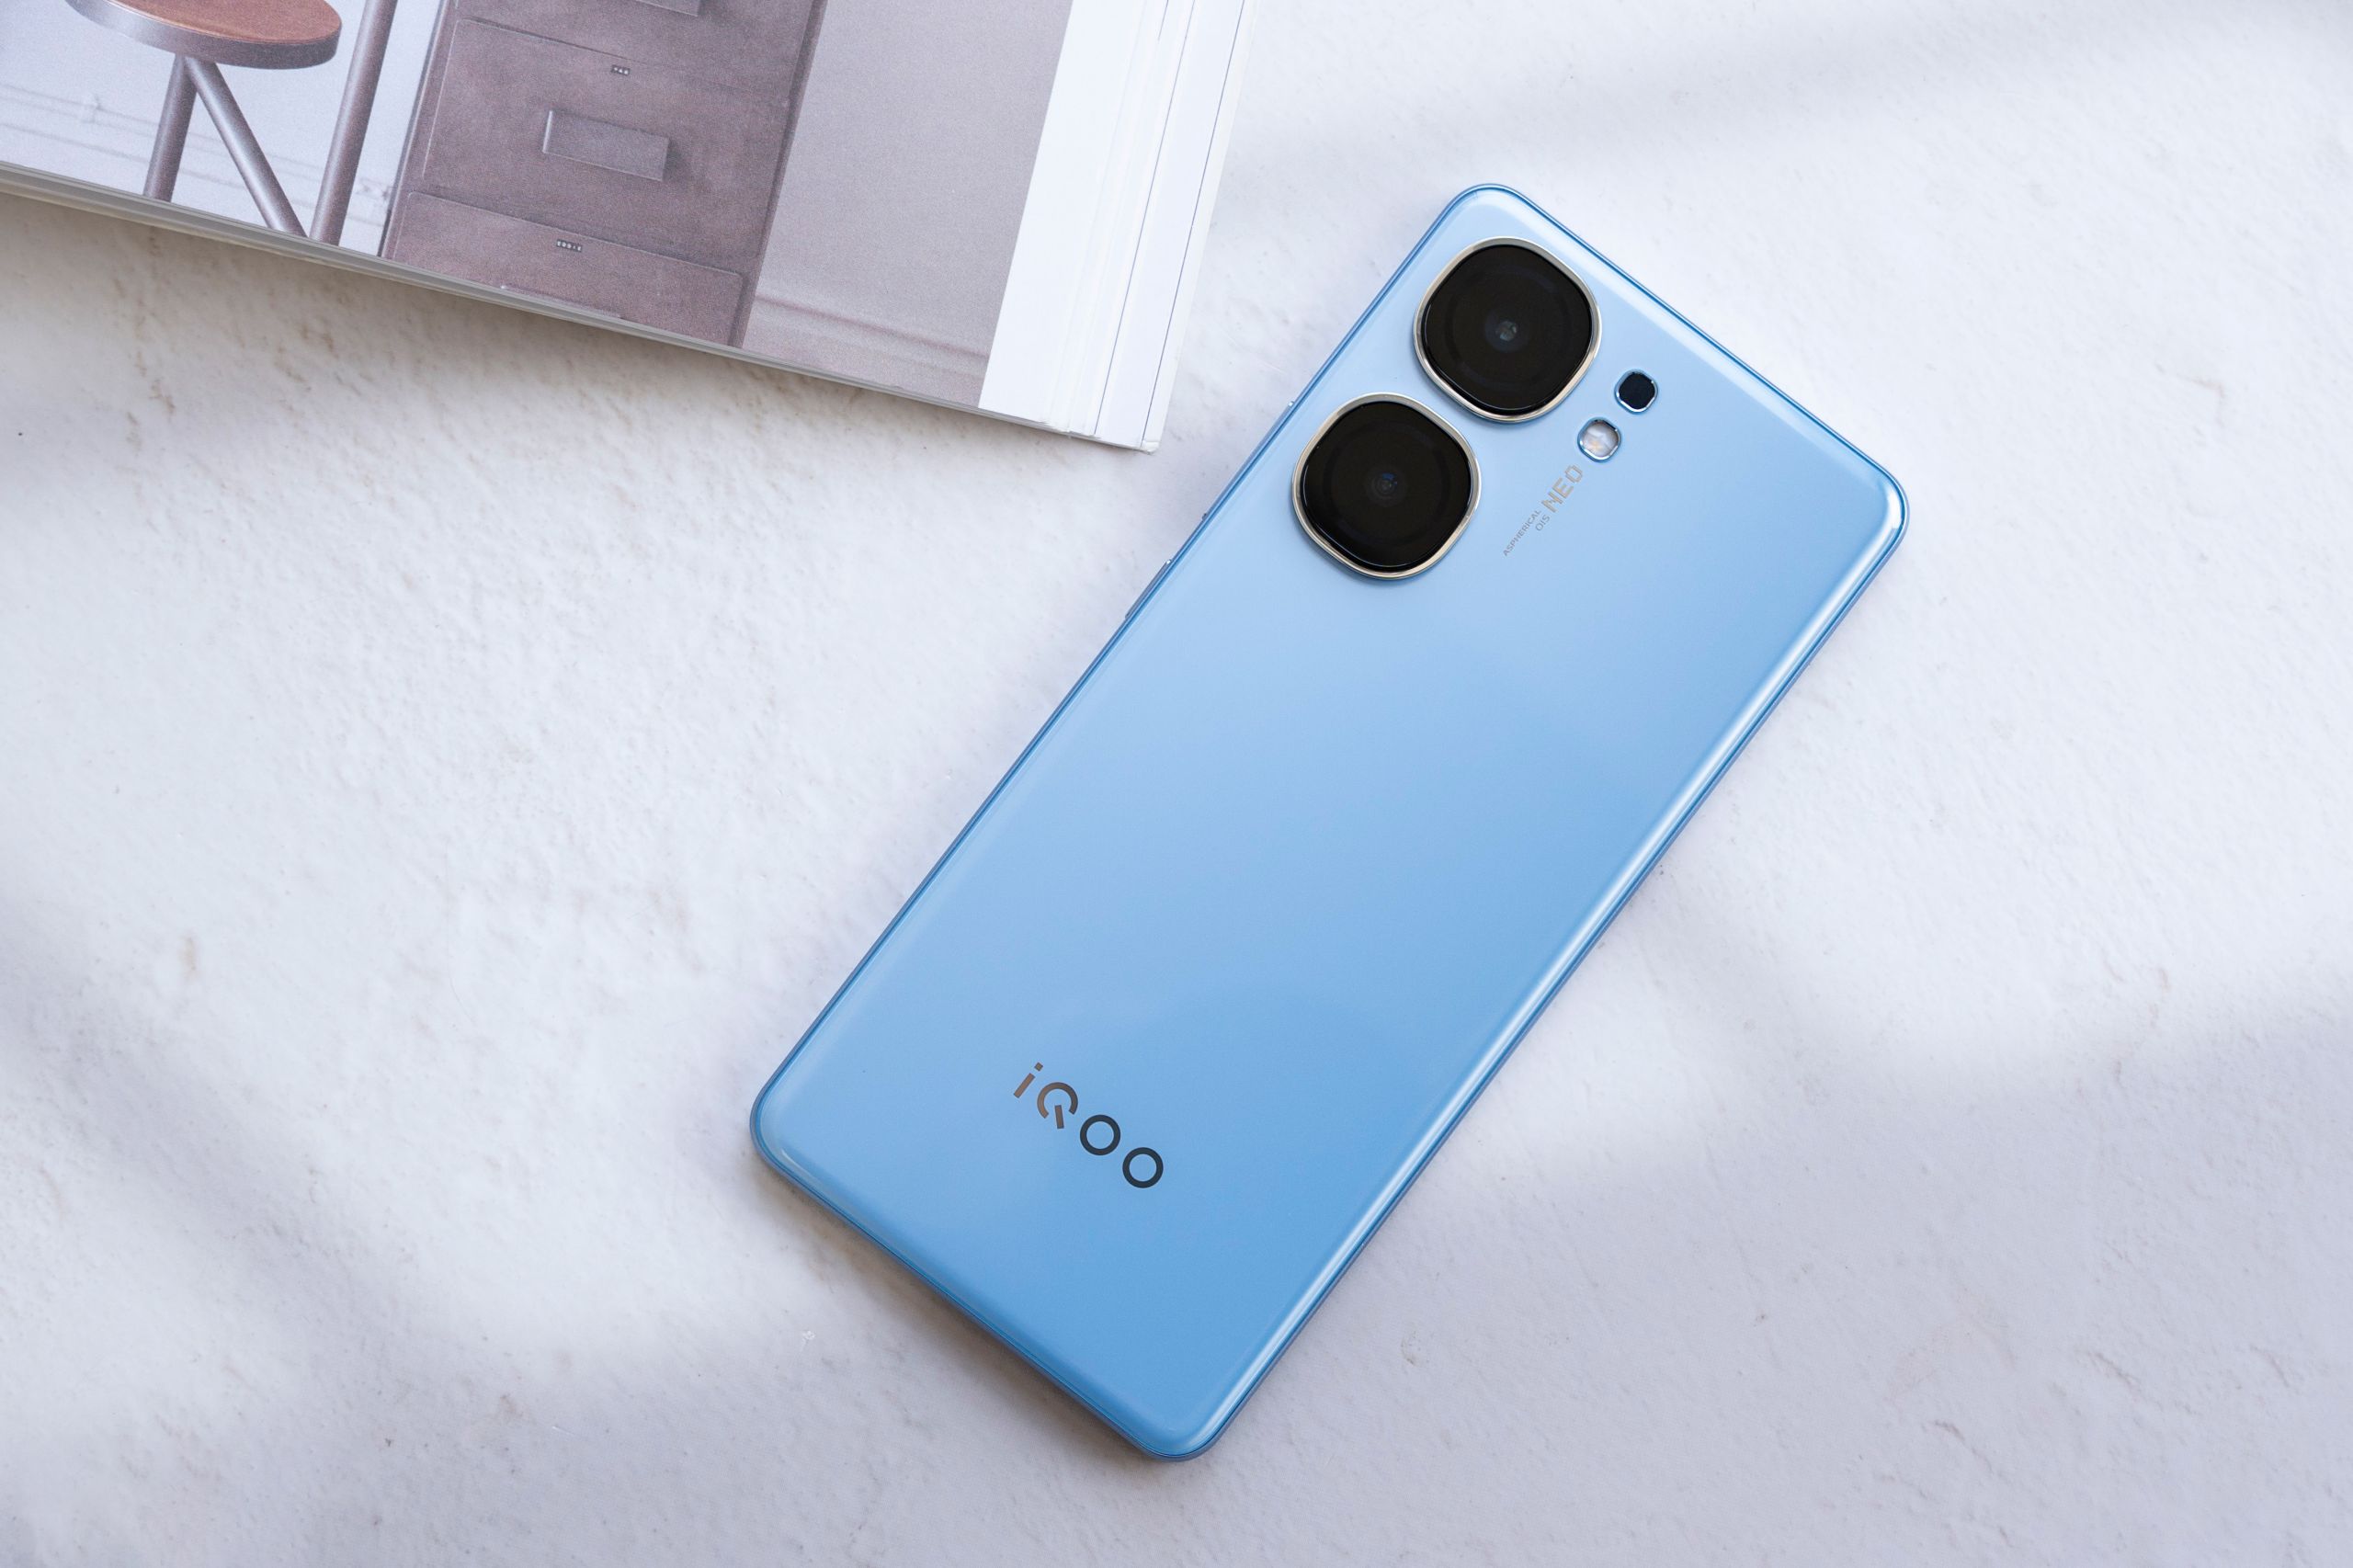 iQOO Neo9 Pro Review